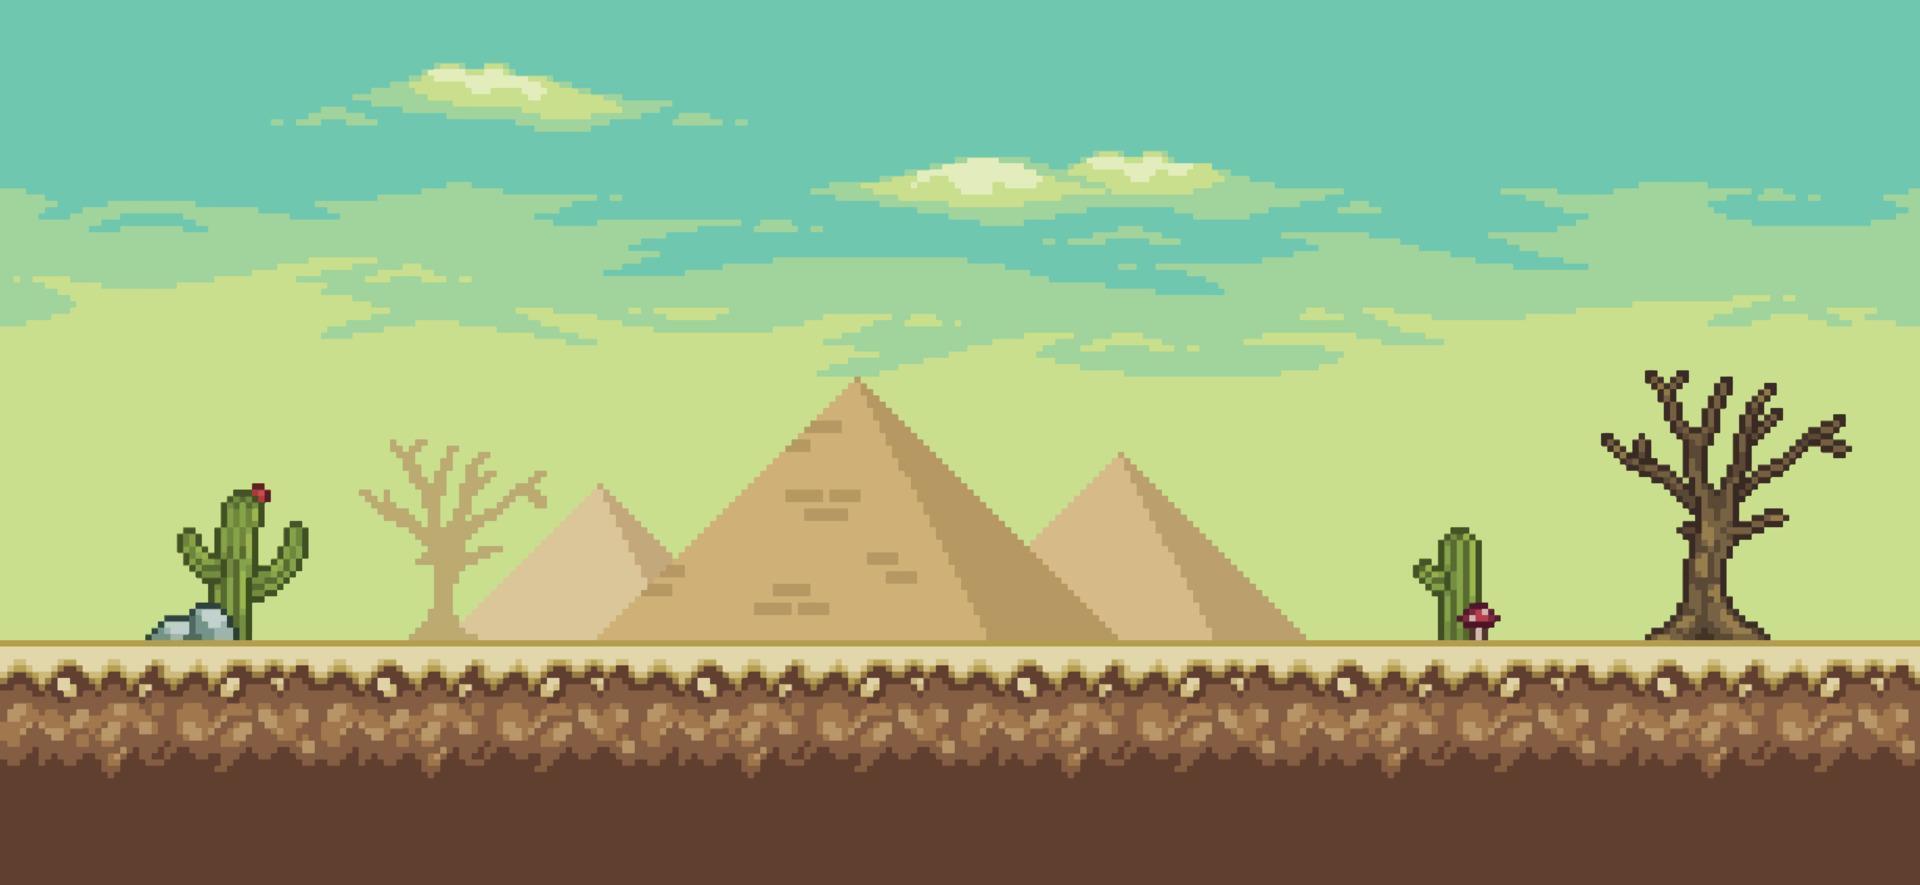 Pixel art desert game scene with palm tree, pyramids, cactuses, tree 8bit background vector